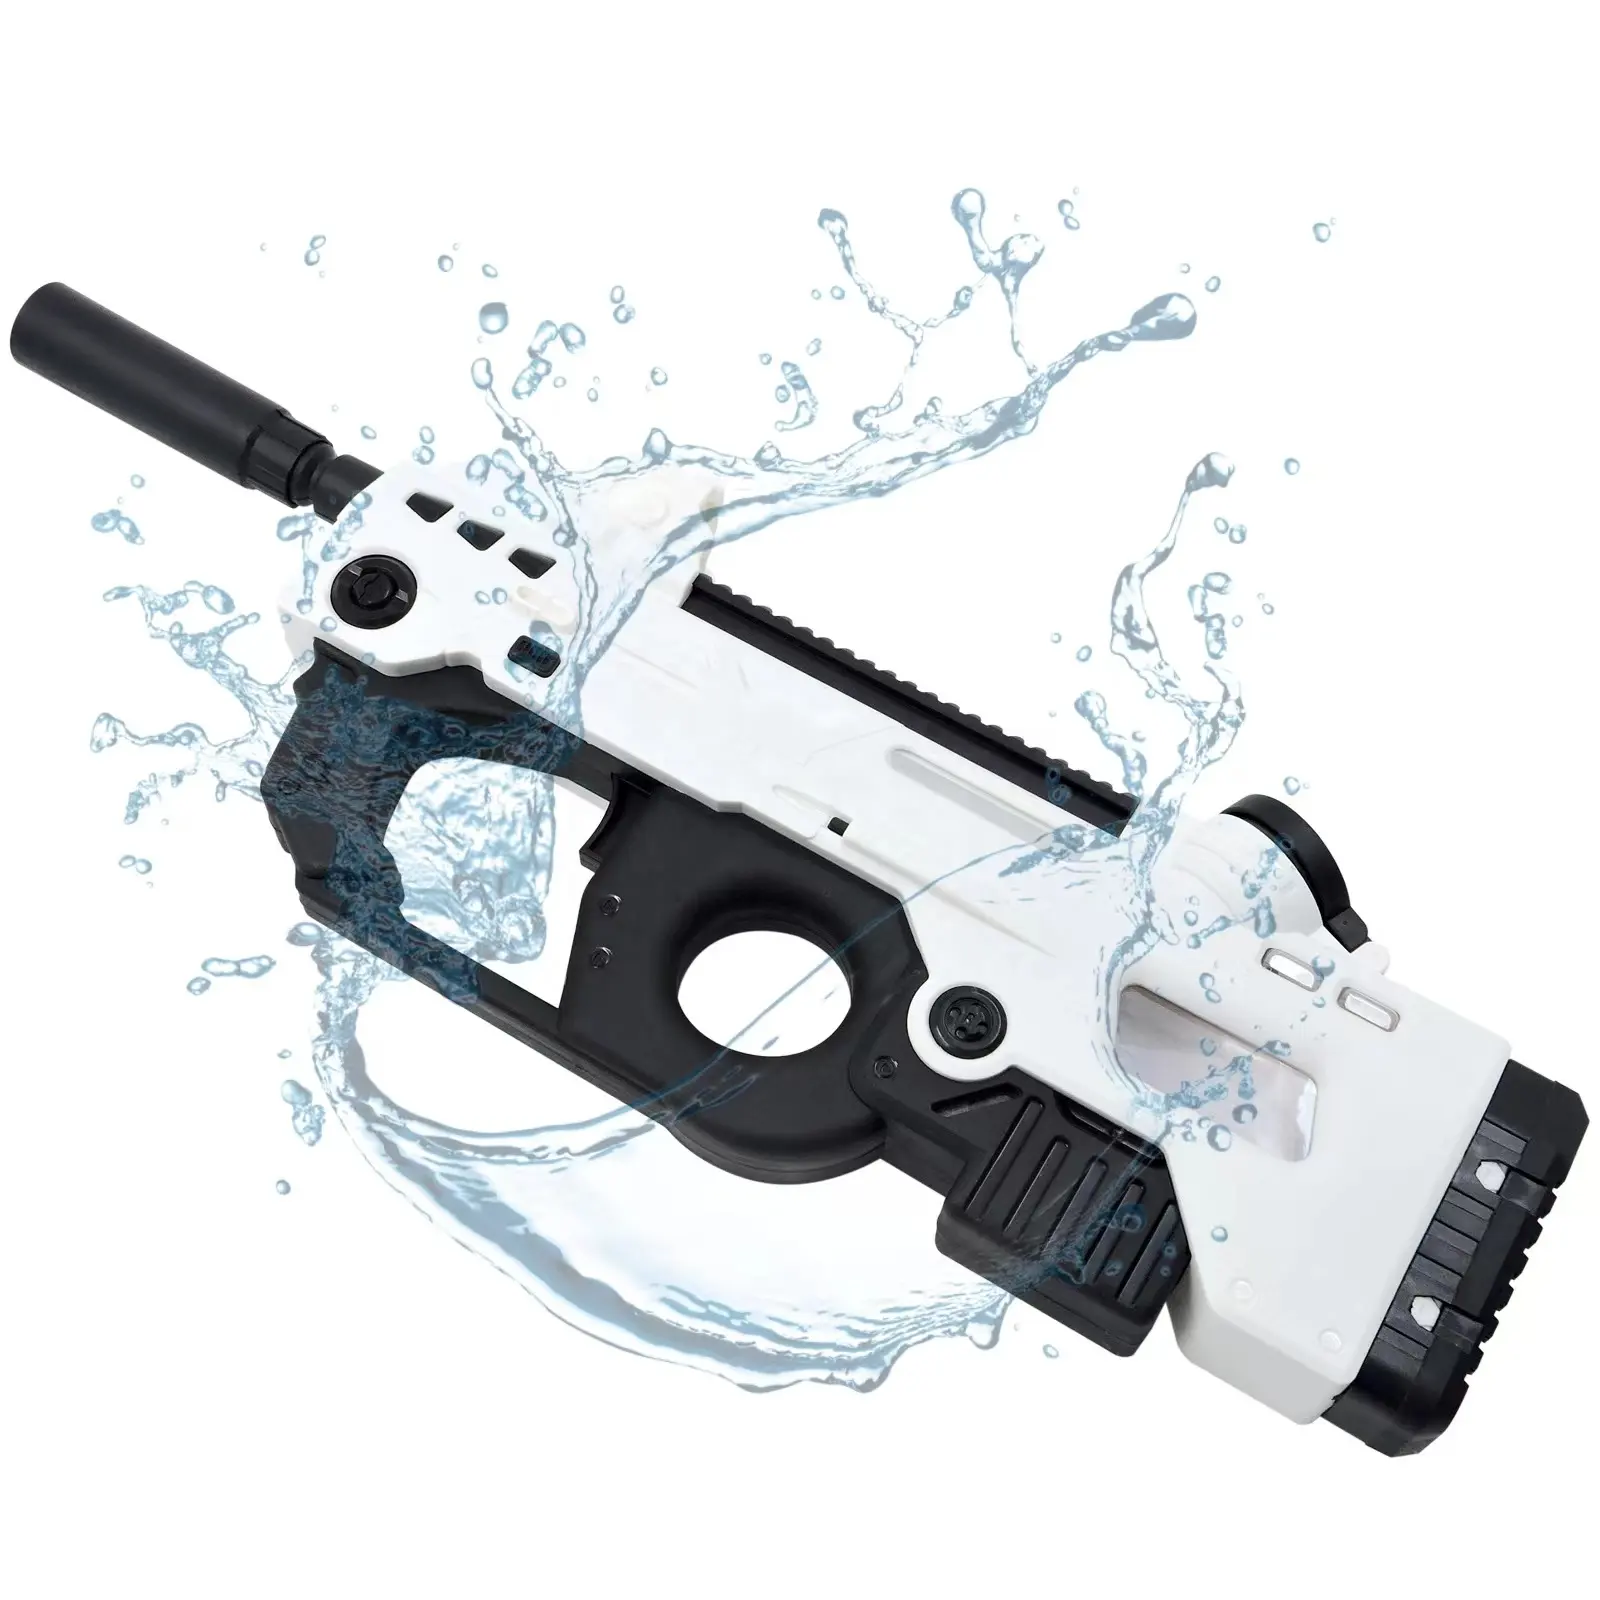 Descuento P90 Pistola de agua eléctrica para adultos Pistola de agua automática de 26 pies de alcance con batería de 1200mAh Potente larga distancia